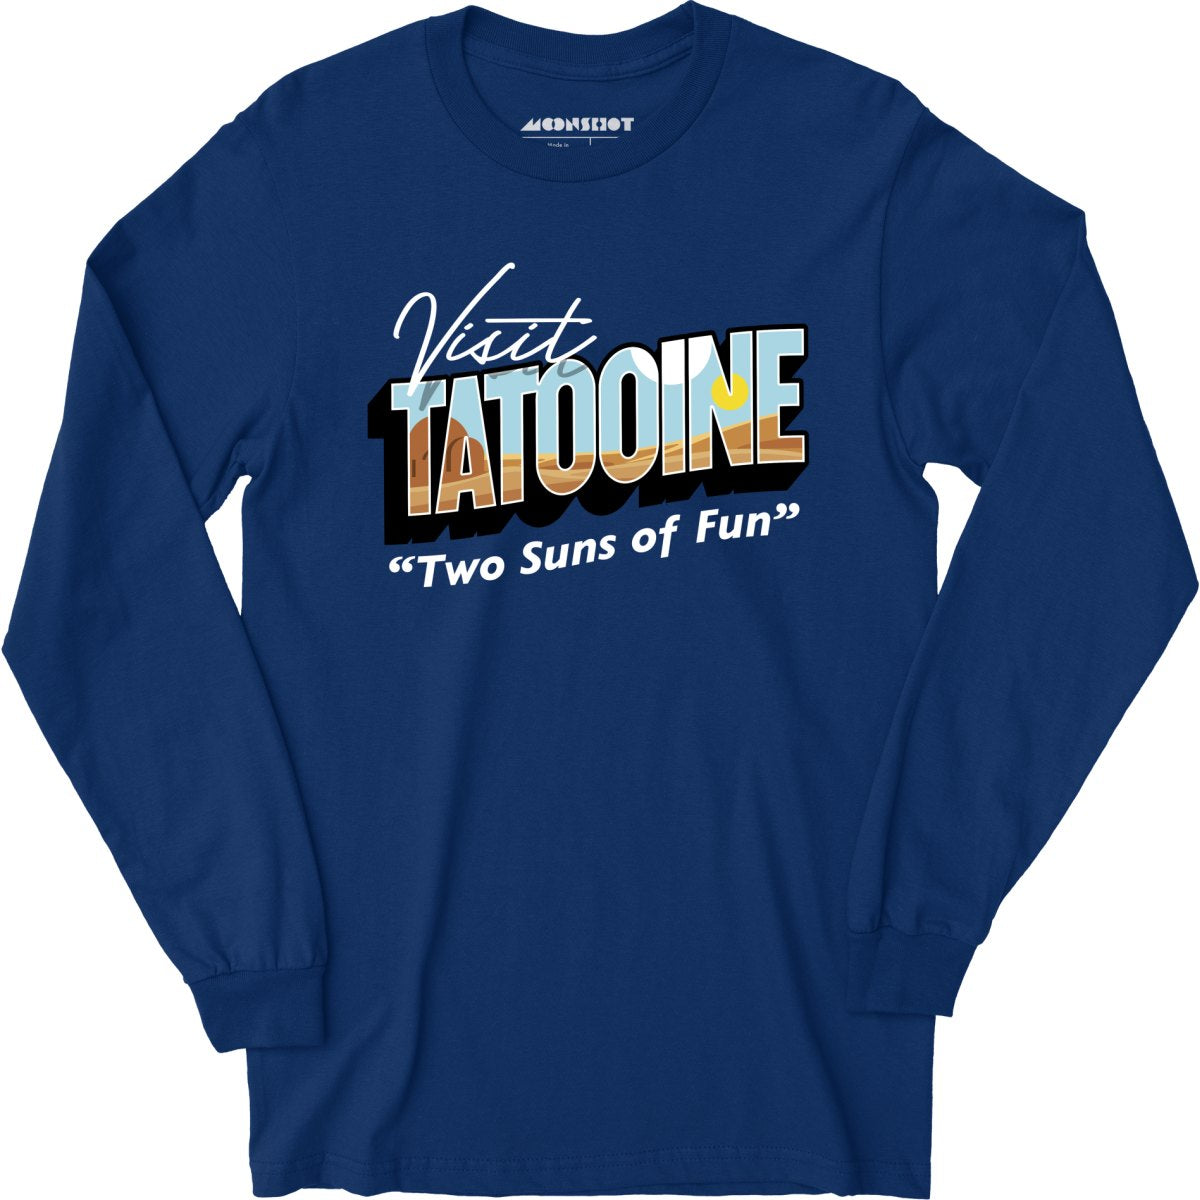 Visit Tatooine - Two Suns of Fun - Long Sleeve T-Shirt